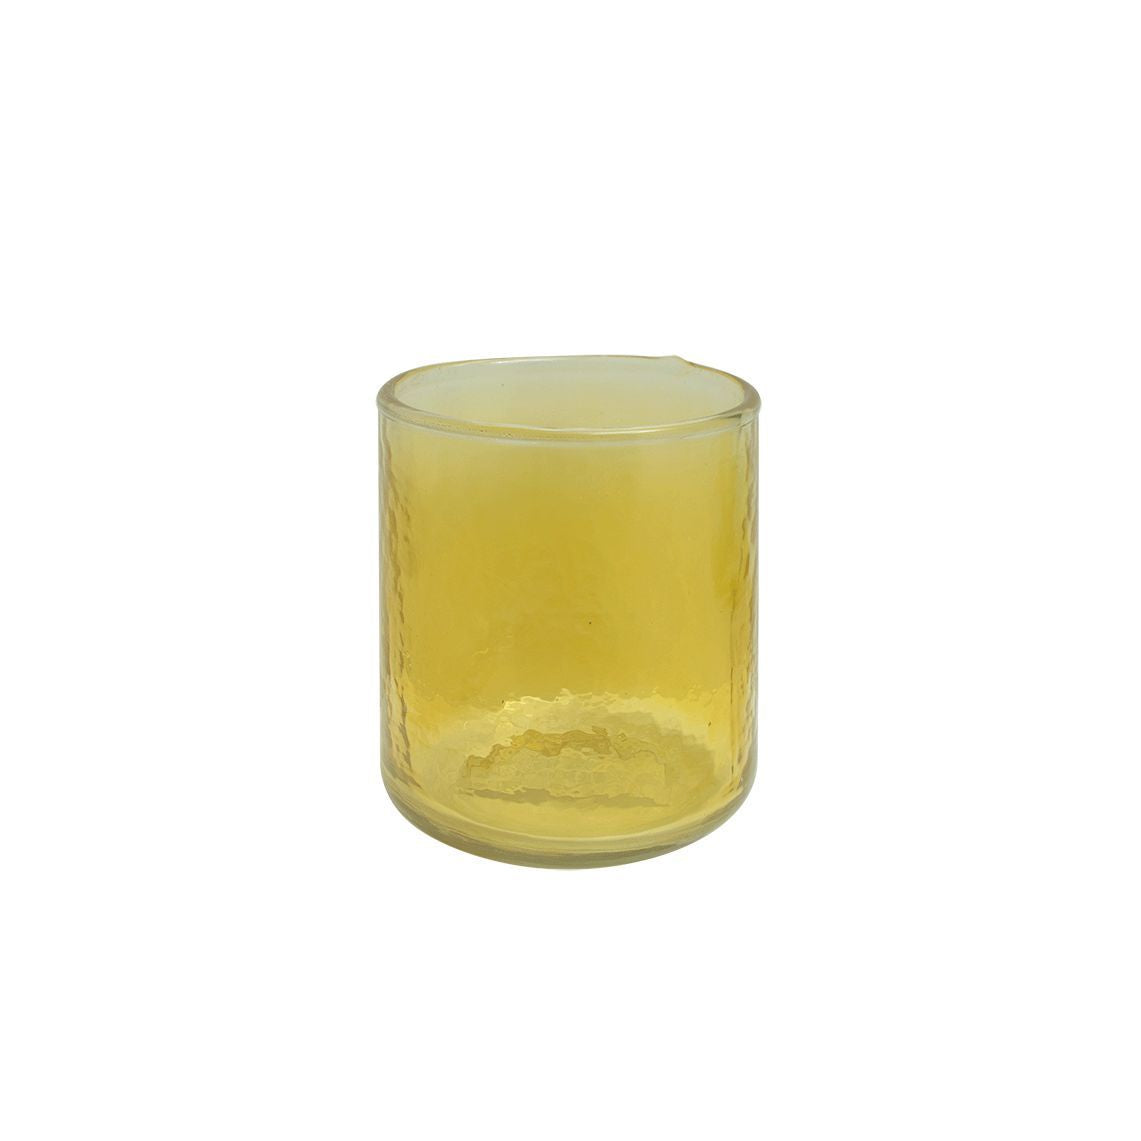 Yolk Yellow Tumbler - Recycled Glass